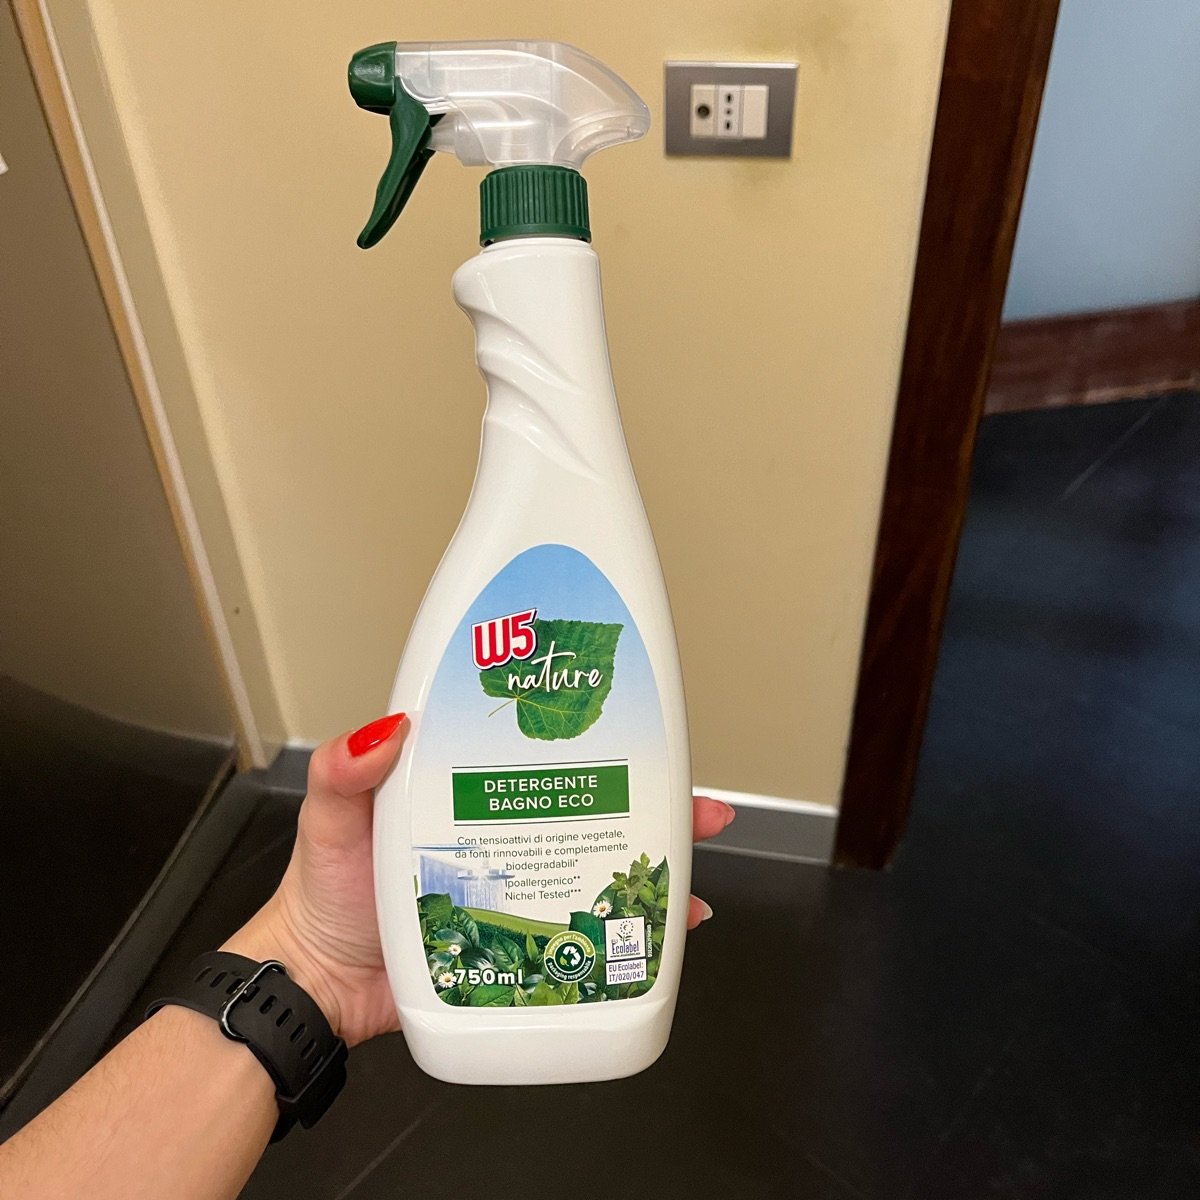 W5nature Detergente Bagno Eco Reviews